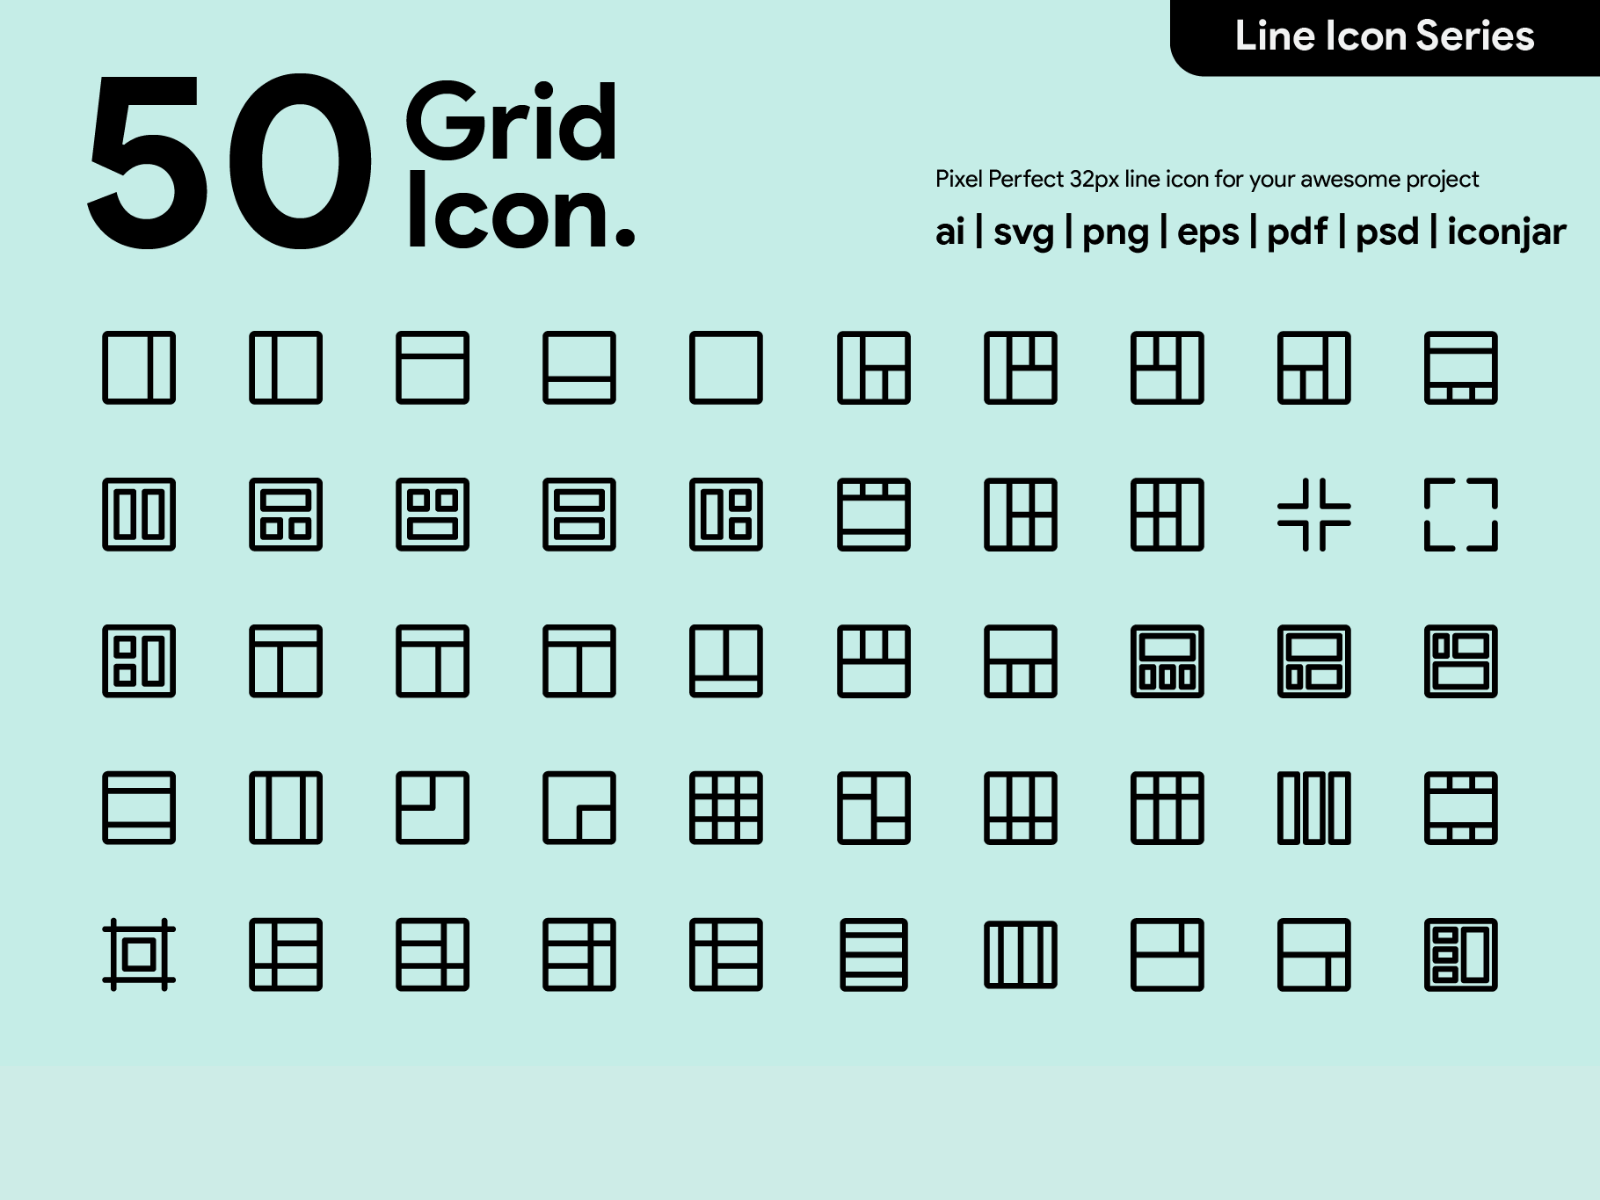 App icons design idea #273: Kawaicon - 50 Grid Line Icon